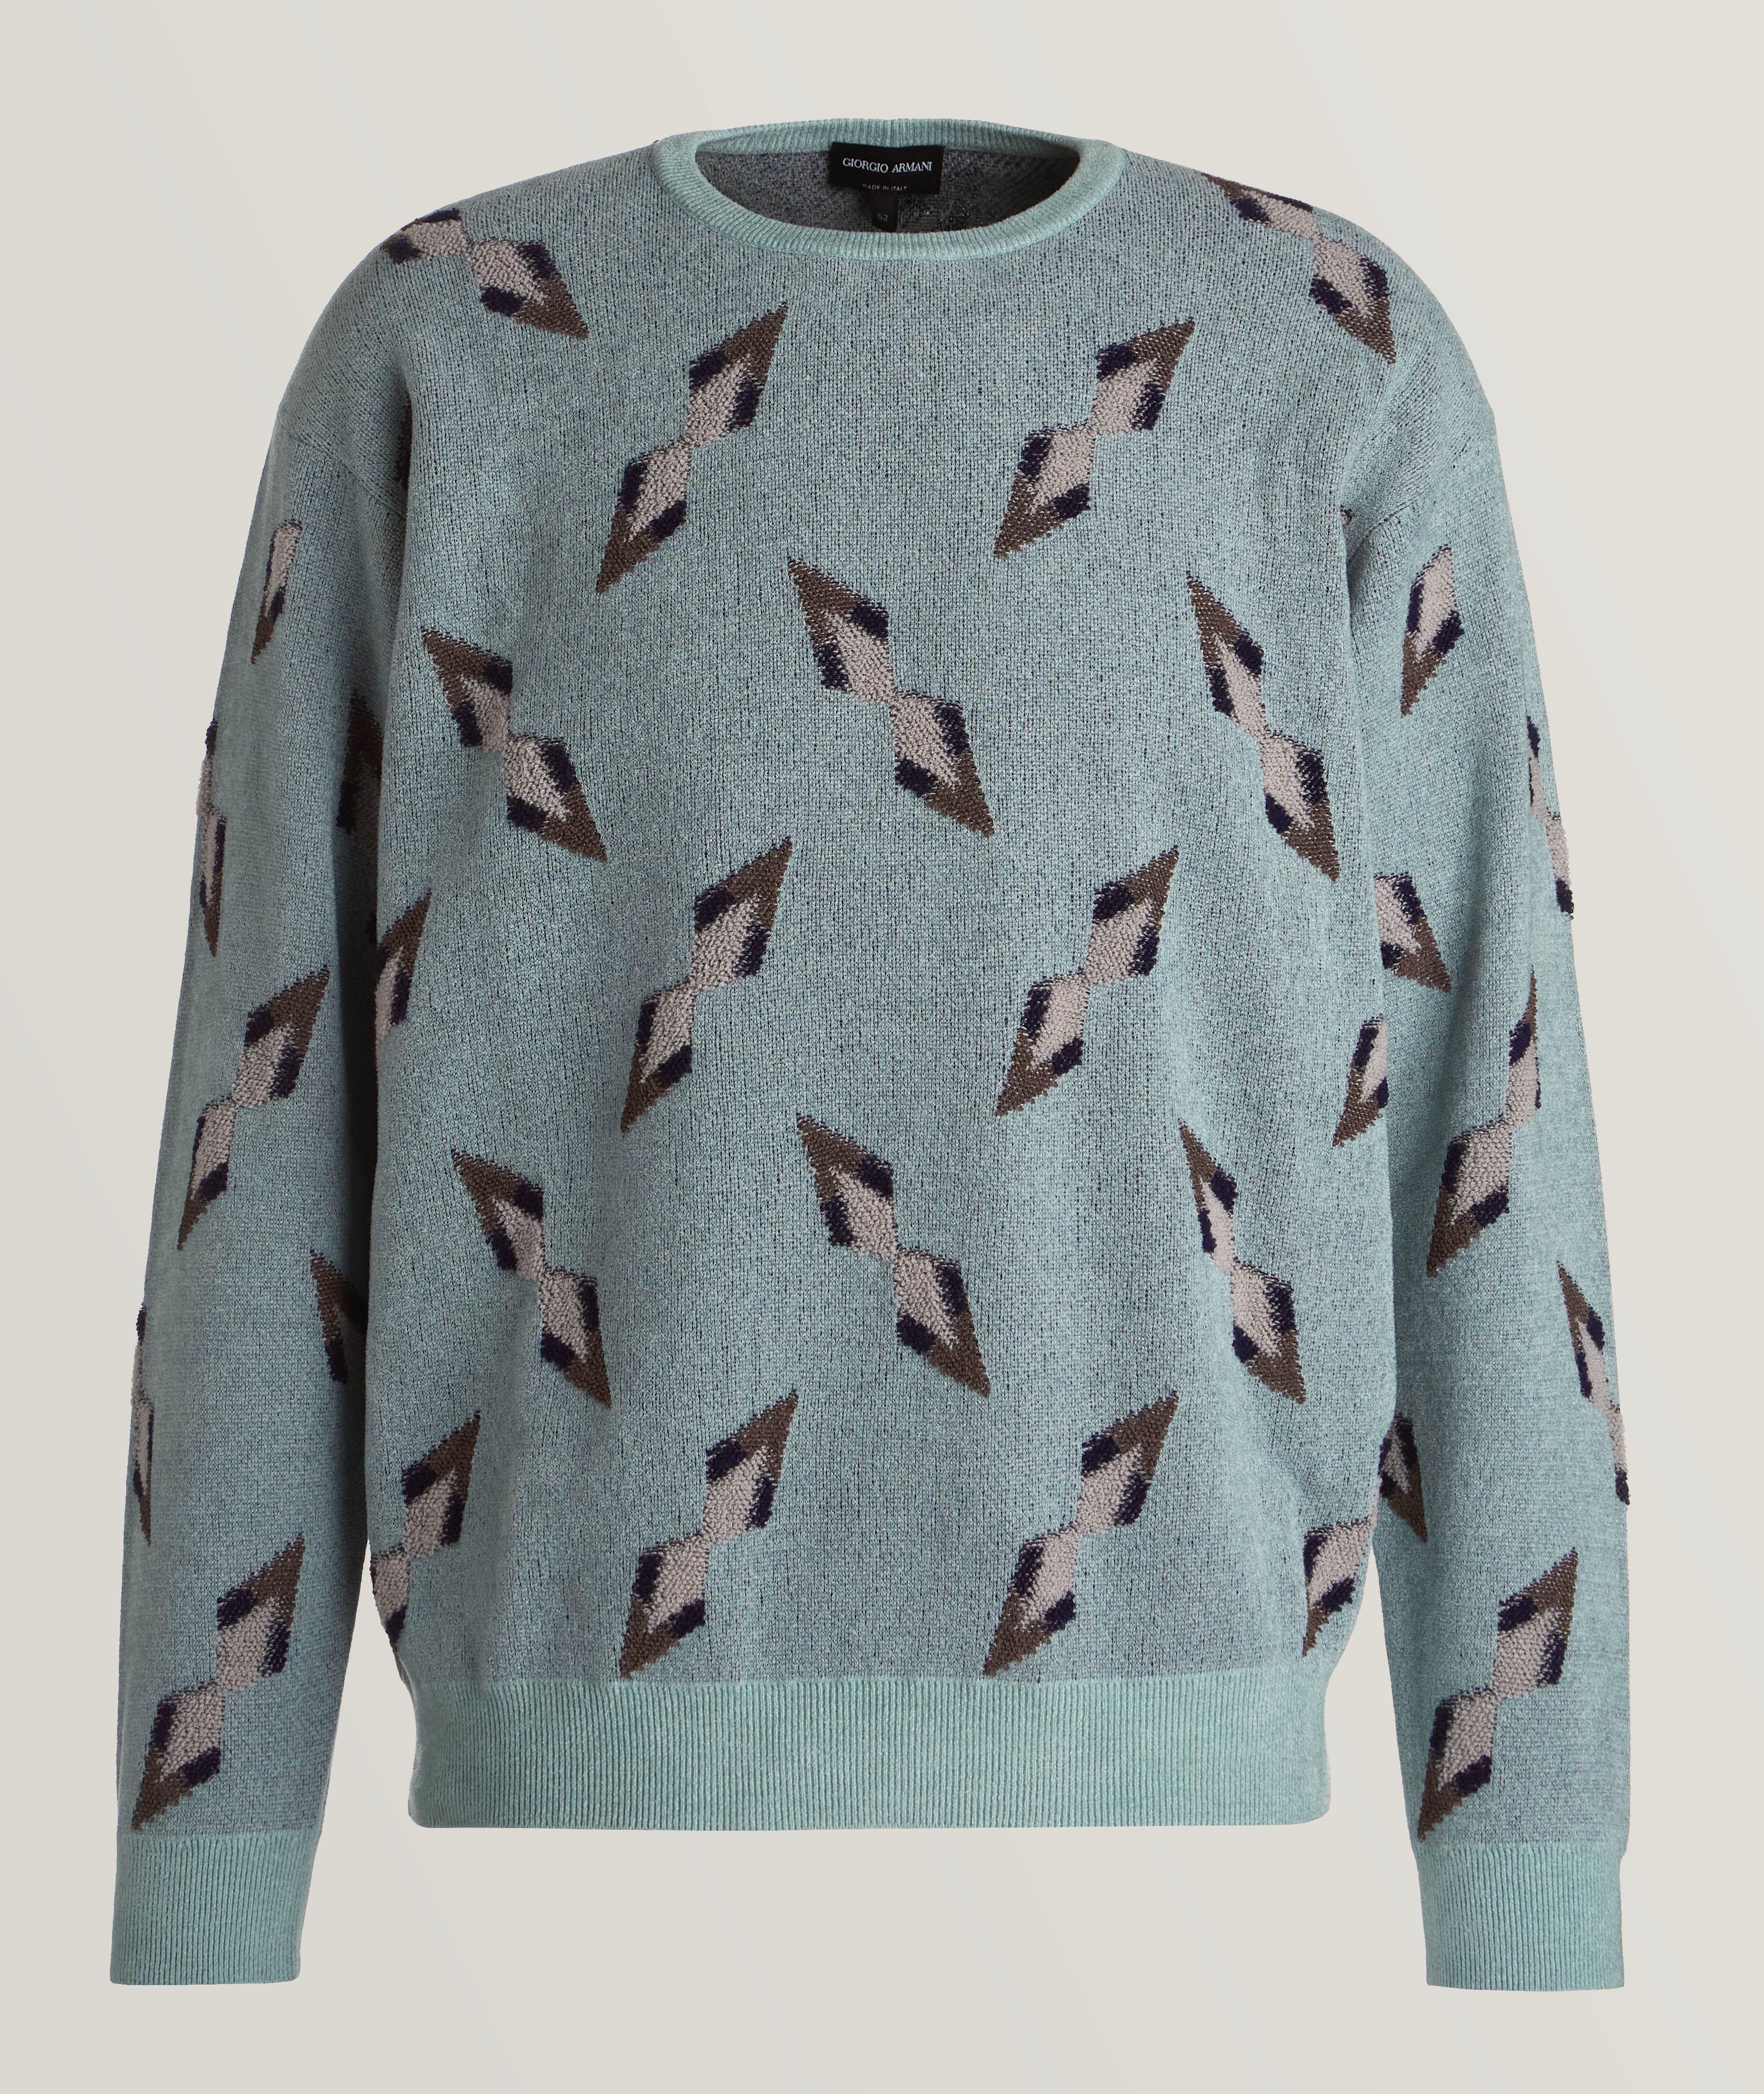 Retro Geometric Jacquard Print Sweater image 0